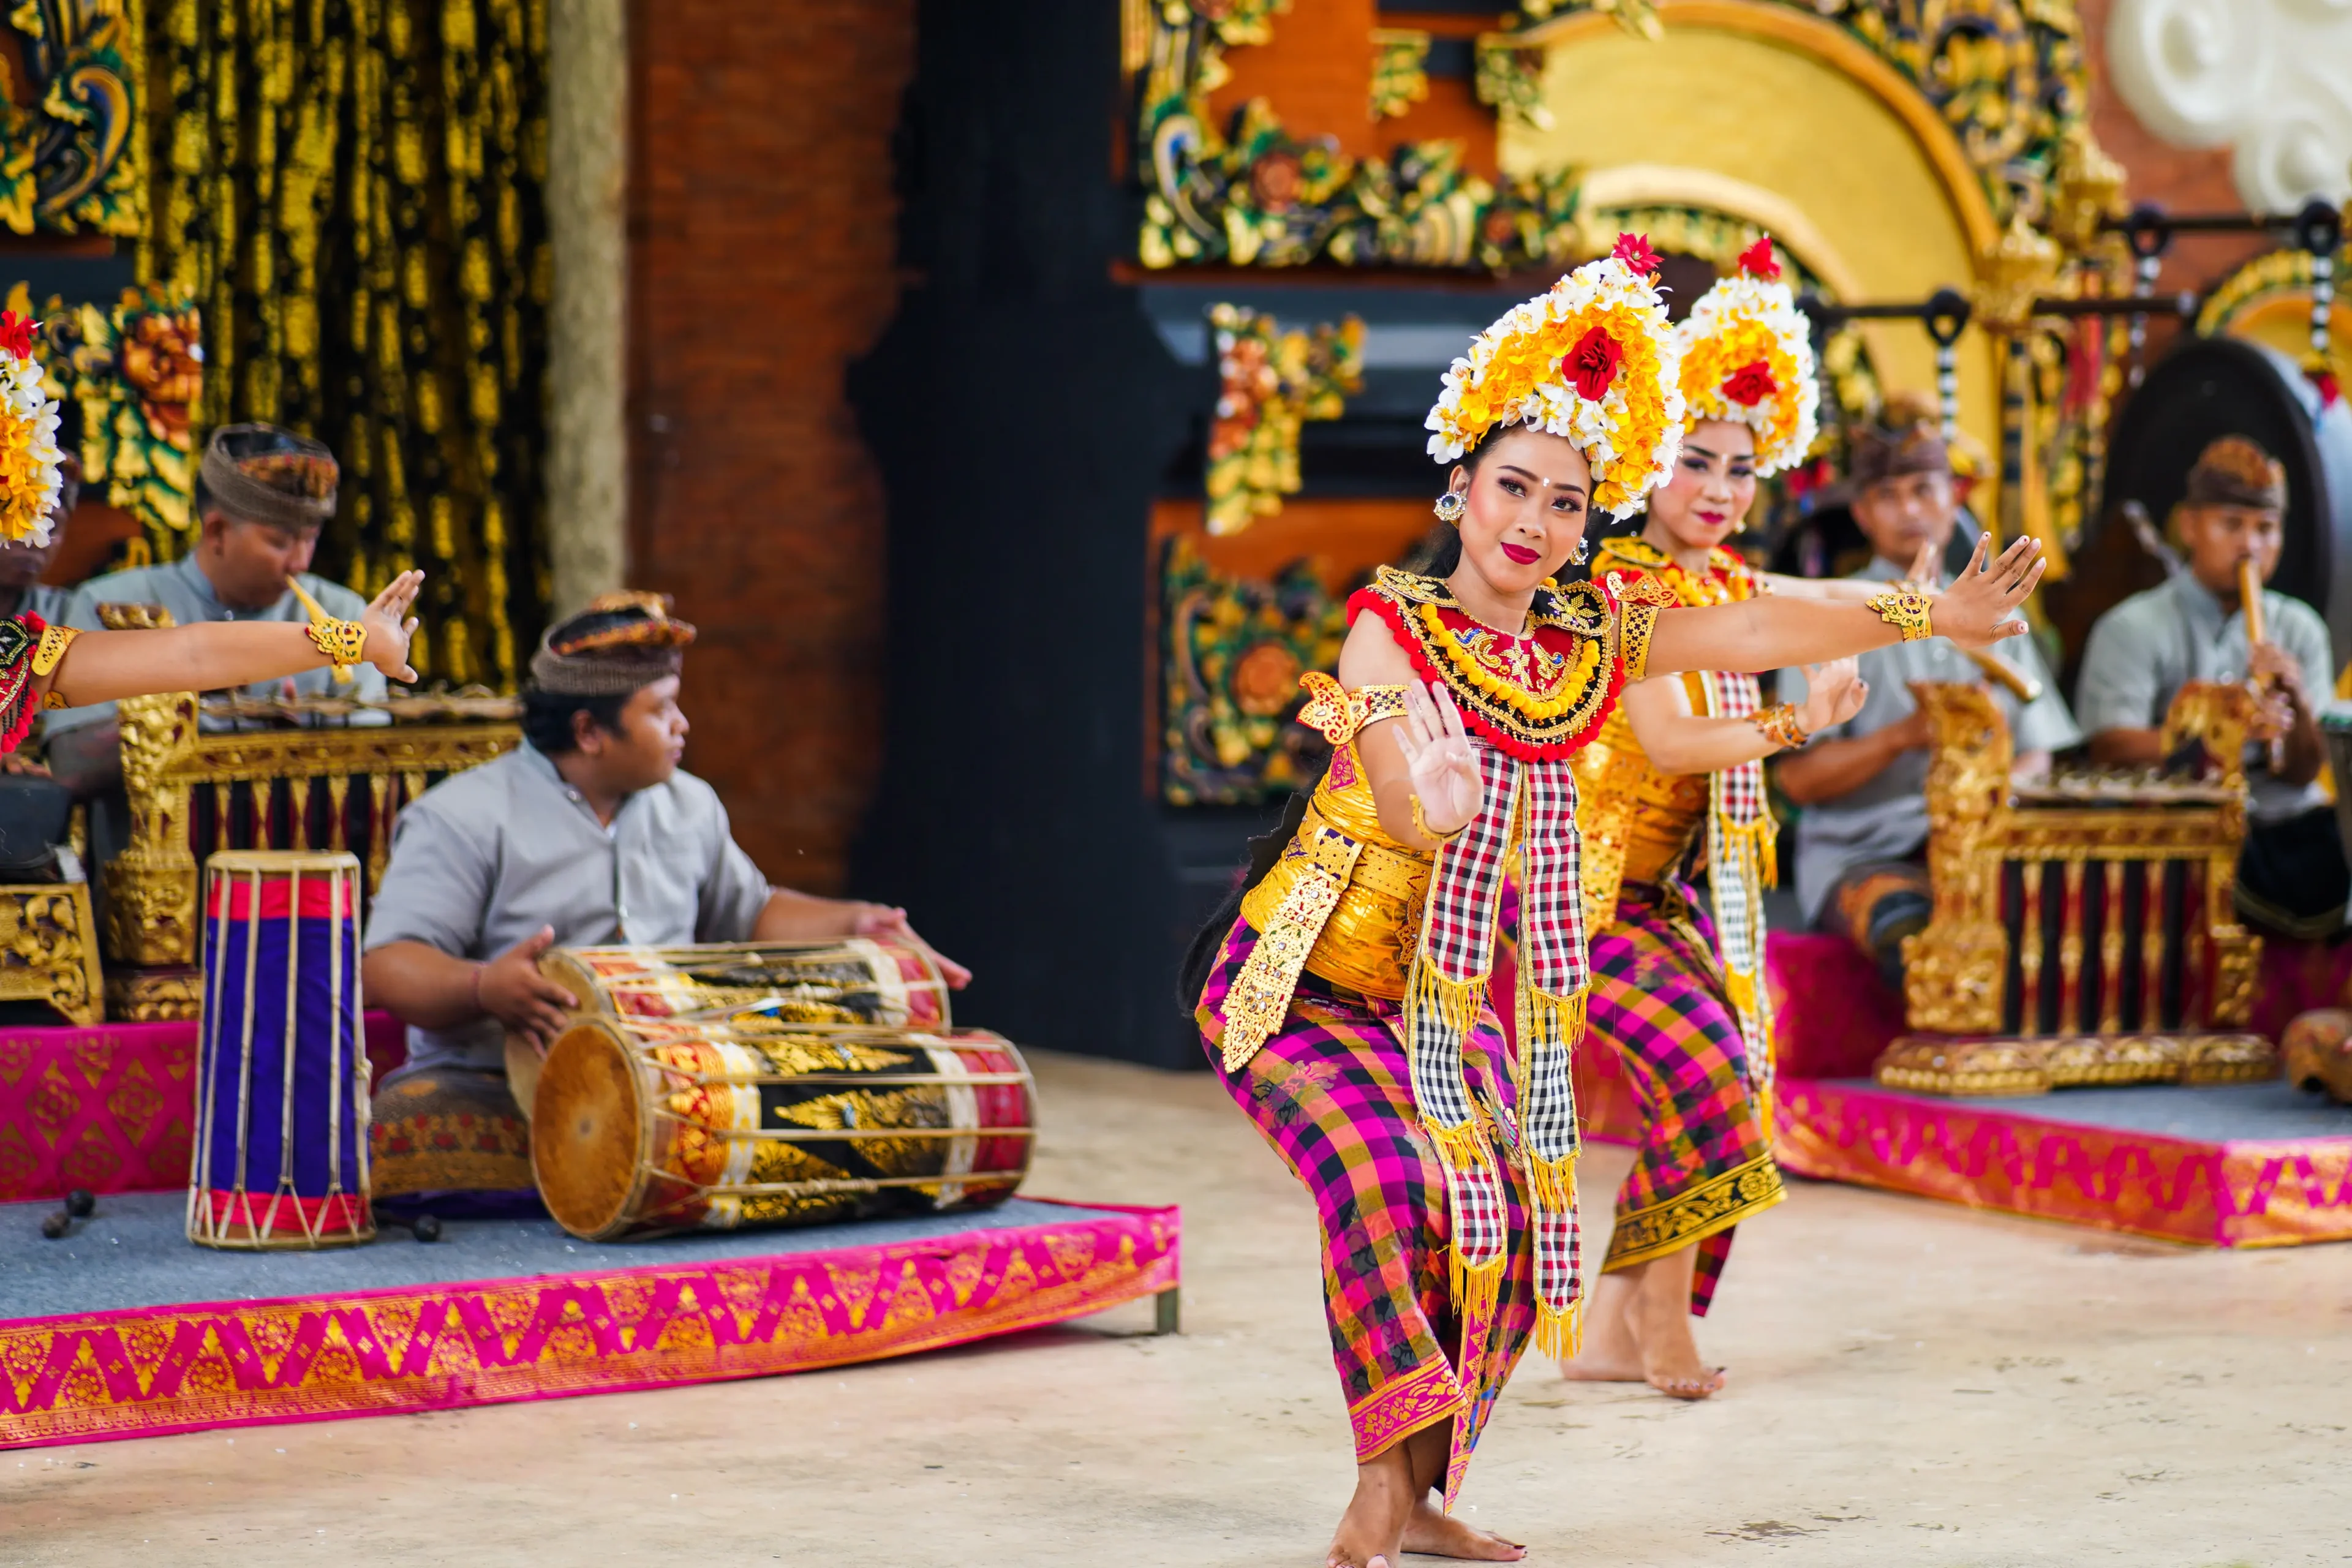 Dance shows in Ubud, Bali